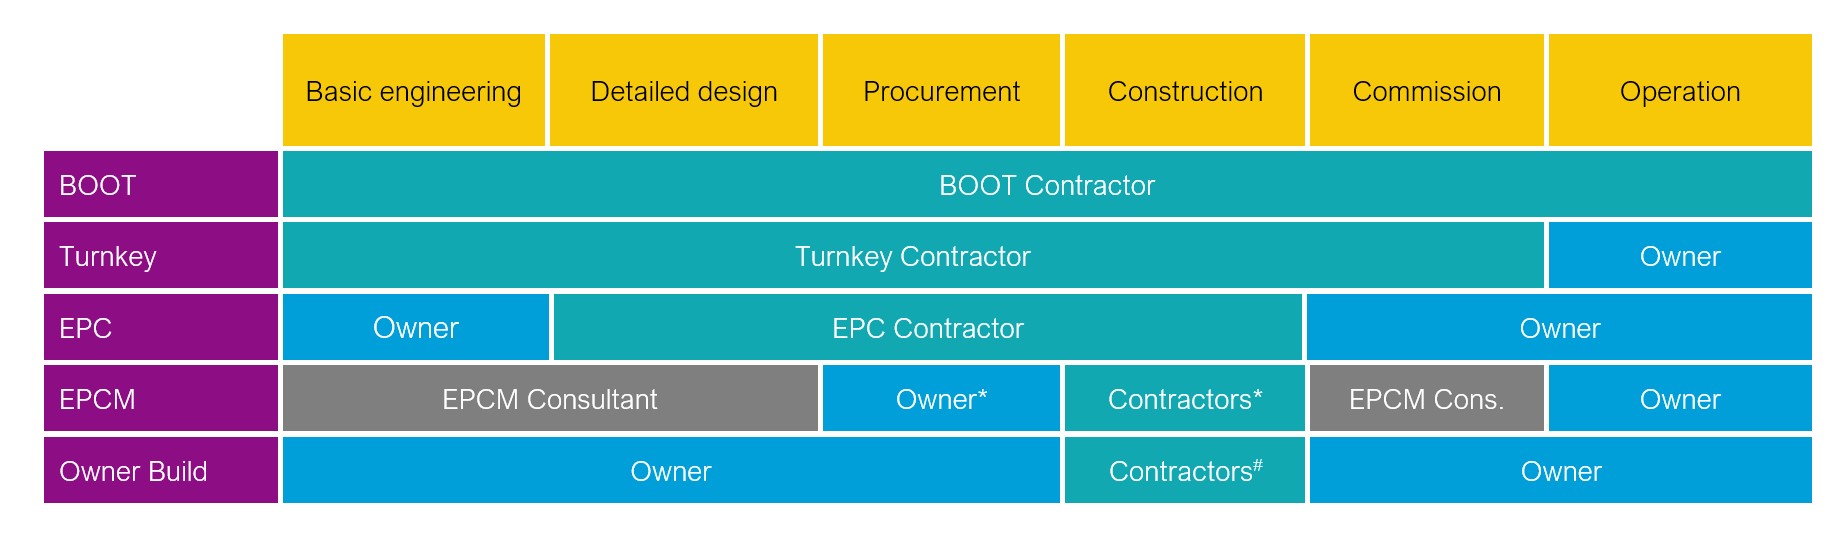 Industrial-Contract-Strategies-Table-1.jpg